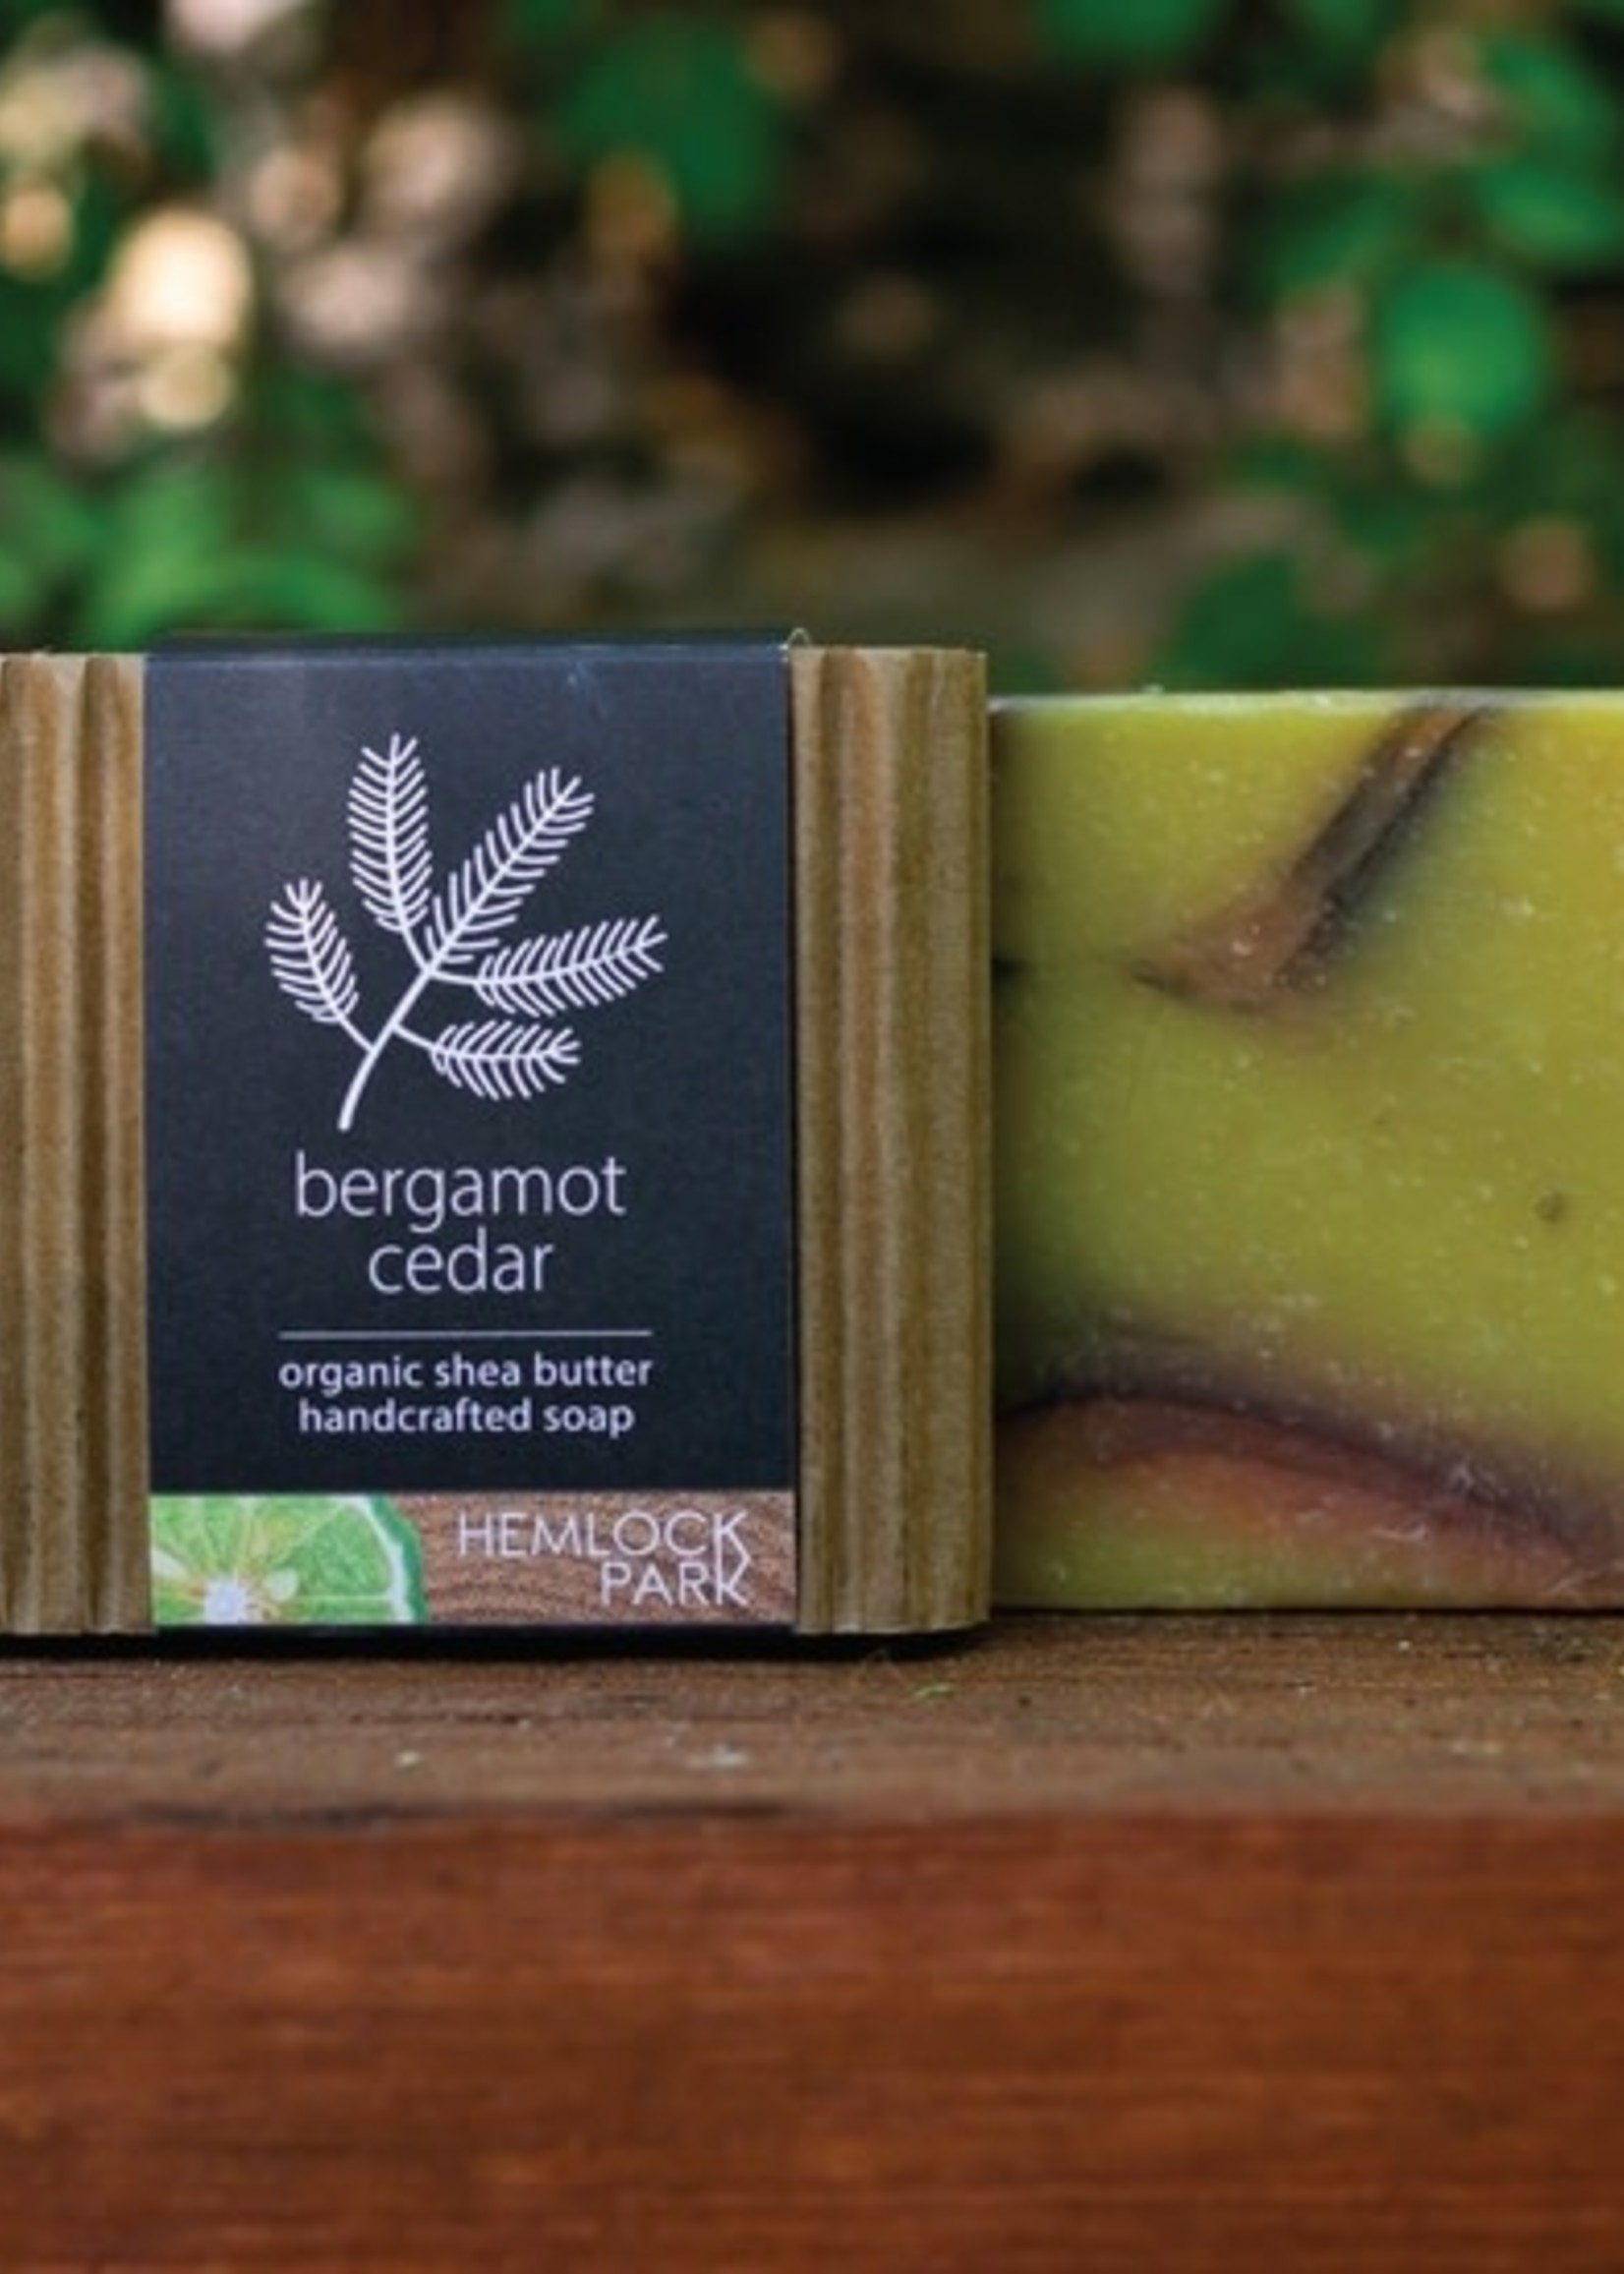 Hemlock Park Bergamot Cedar Organic Soap